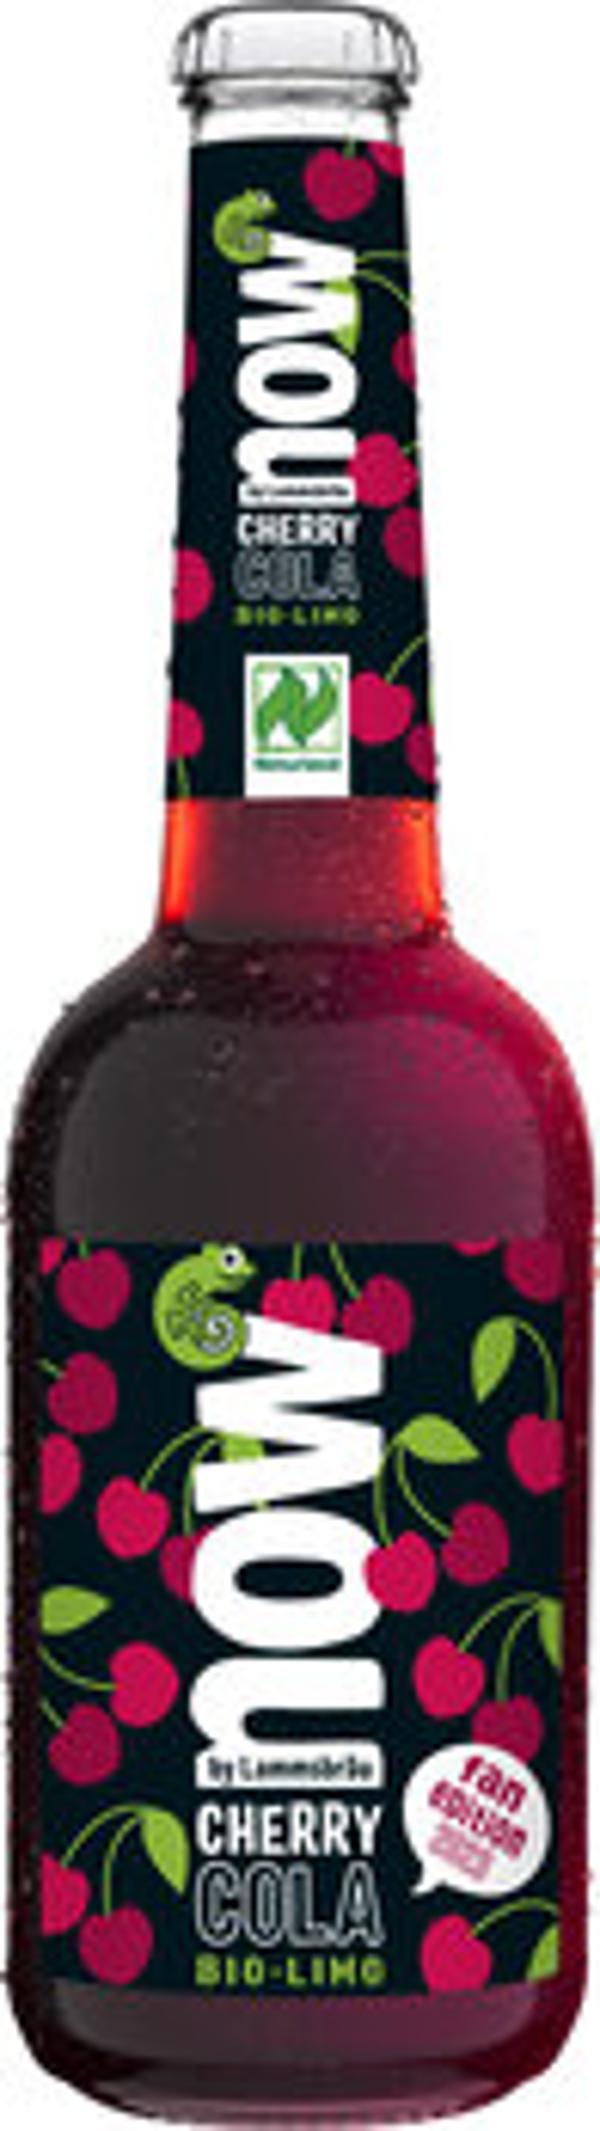 Produktfoto zu NOW Cherry Cola, 10x0,33 l